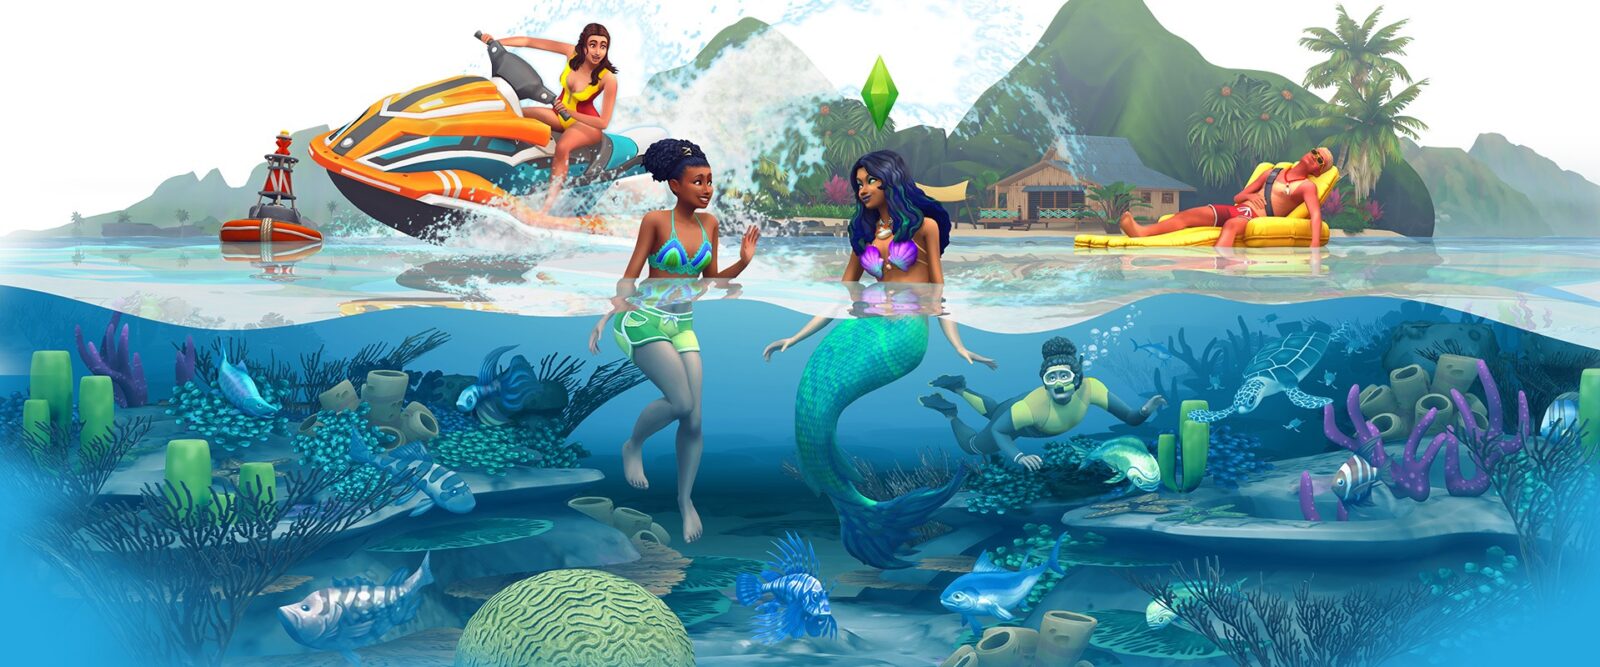 Sims 4 na konsole